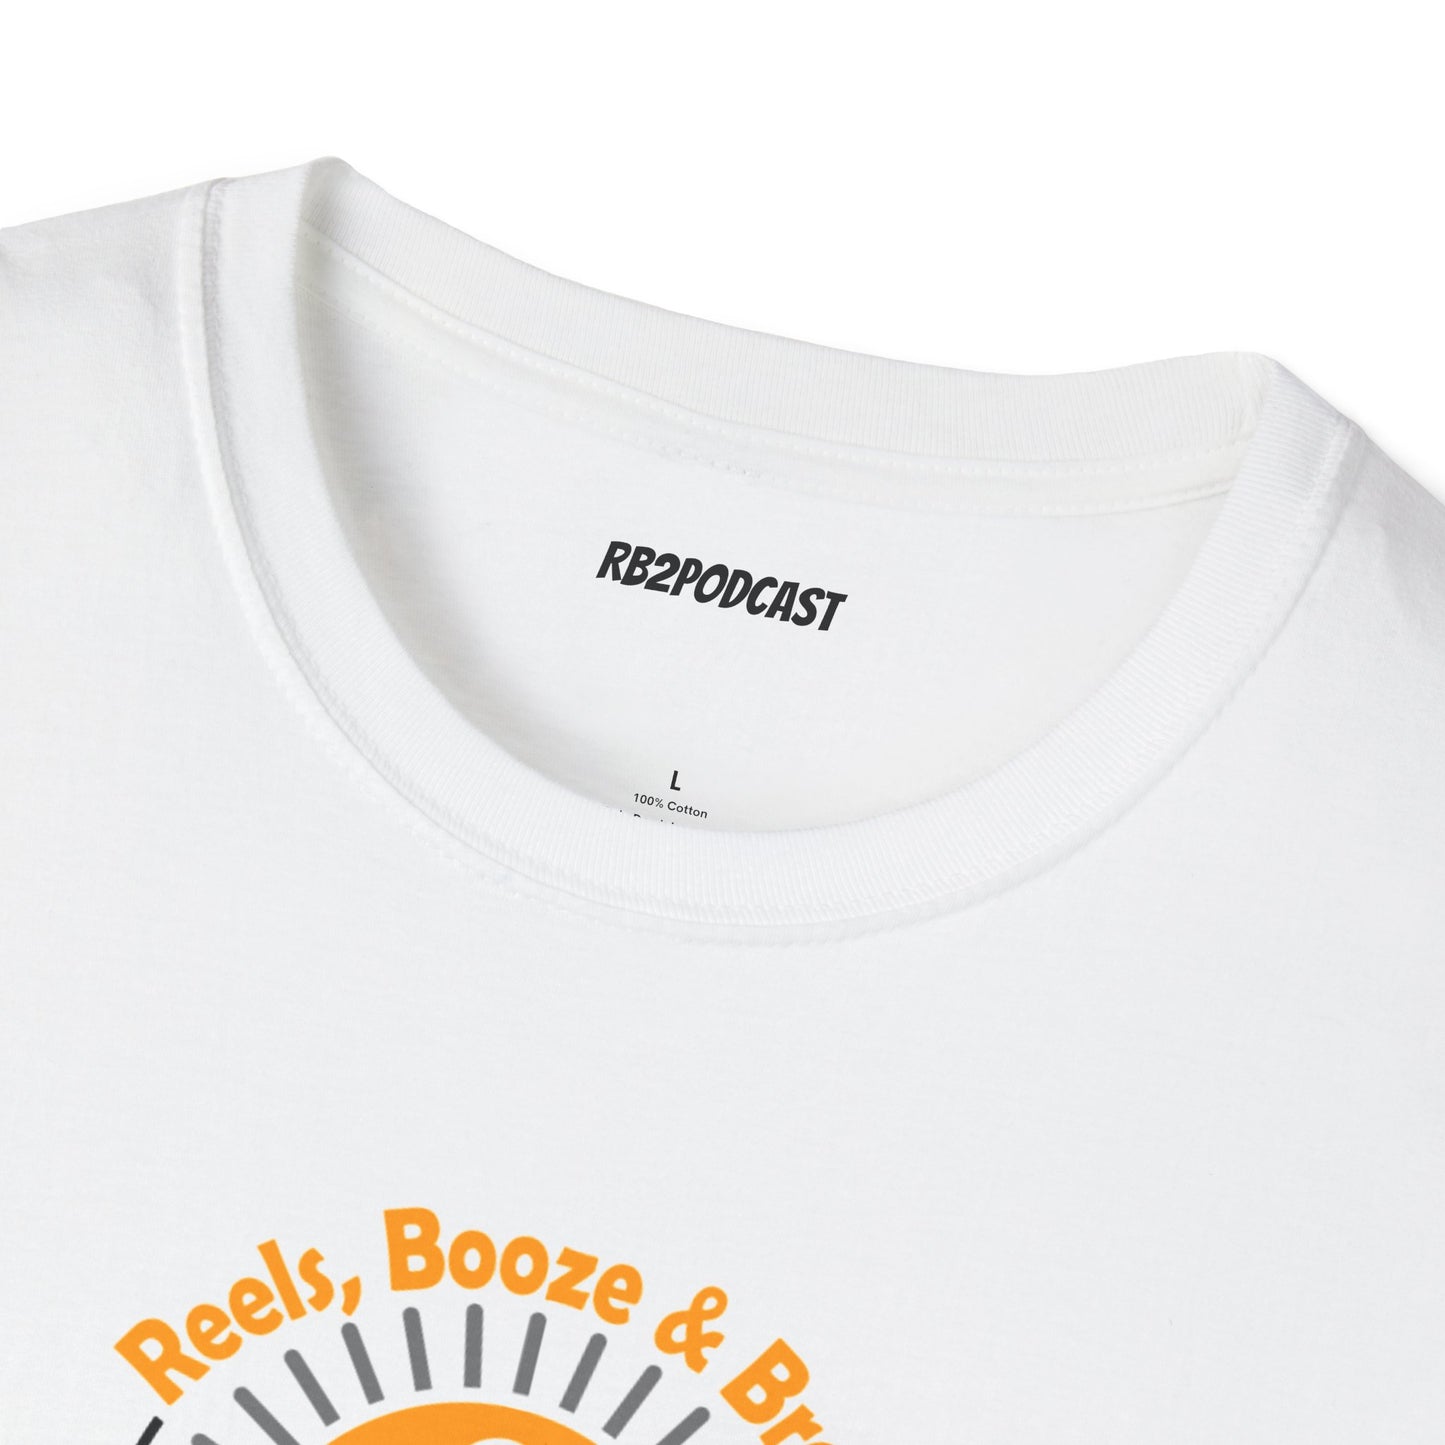 RB2podcast Reel Logo T-Shirt